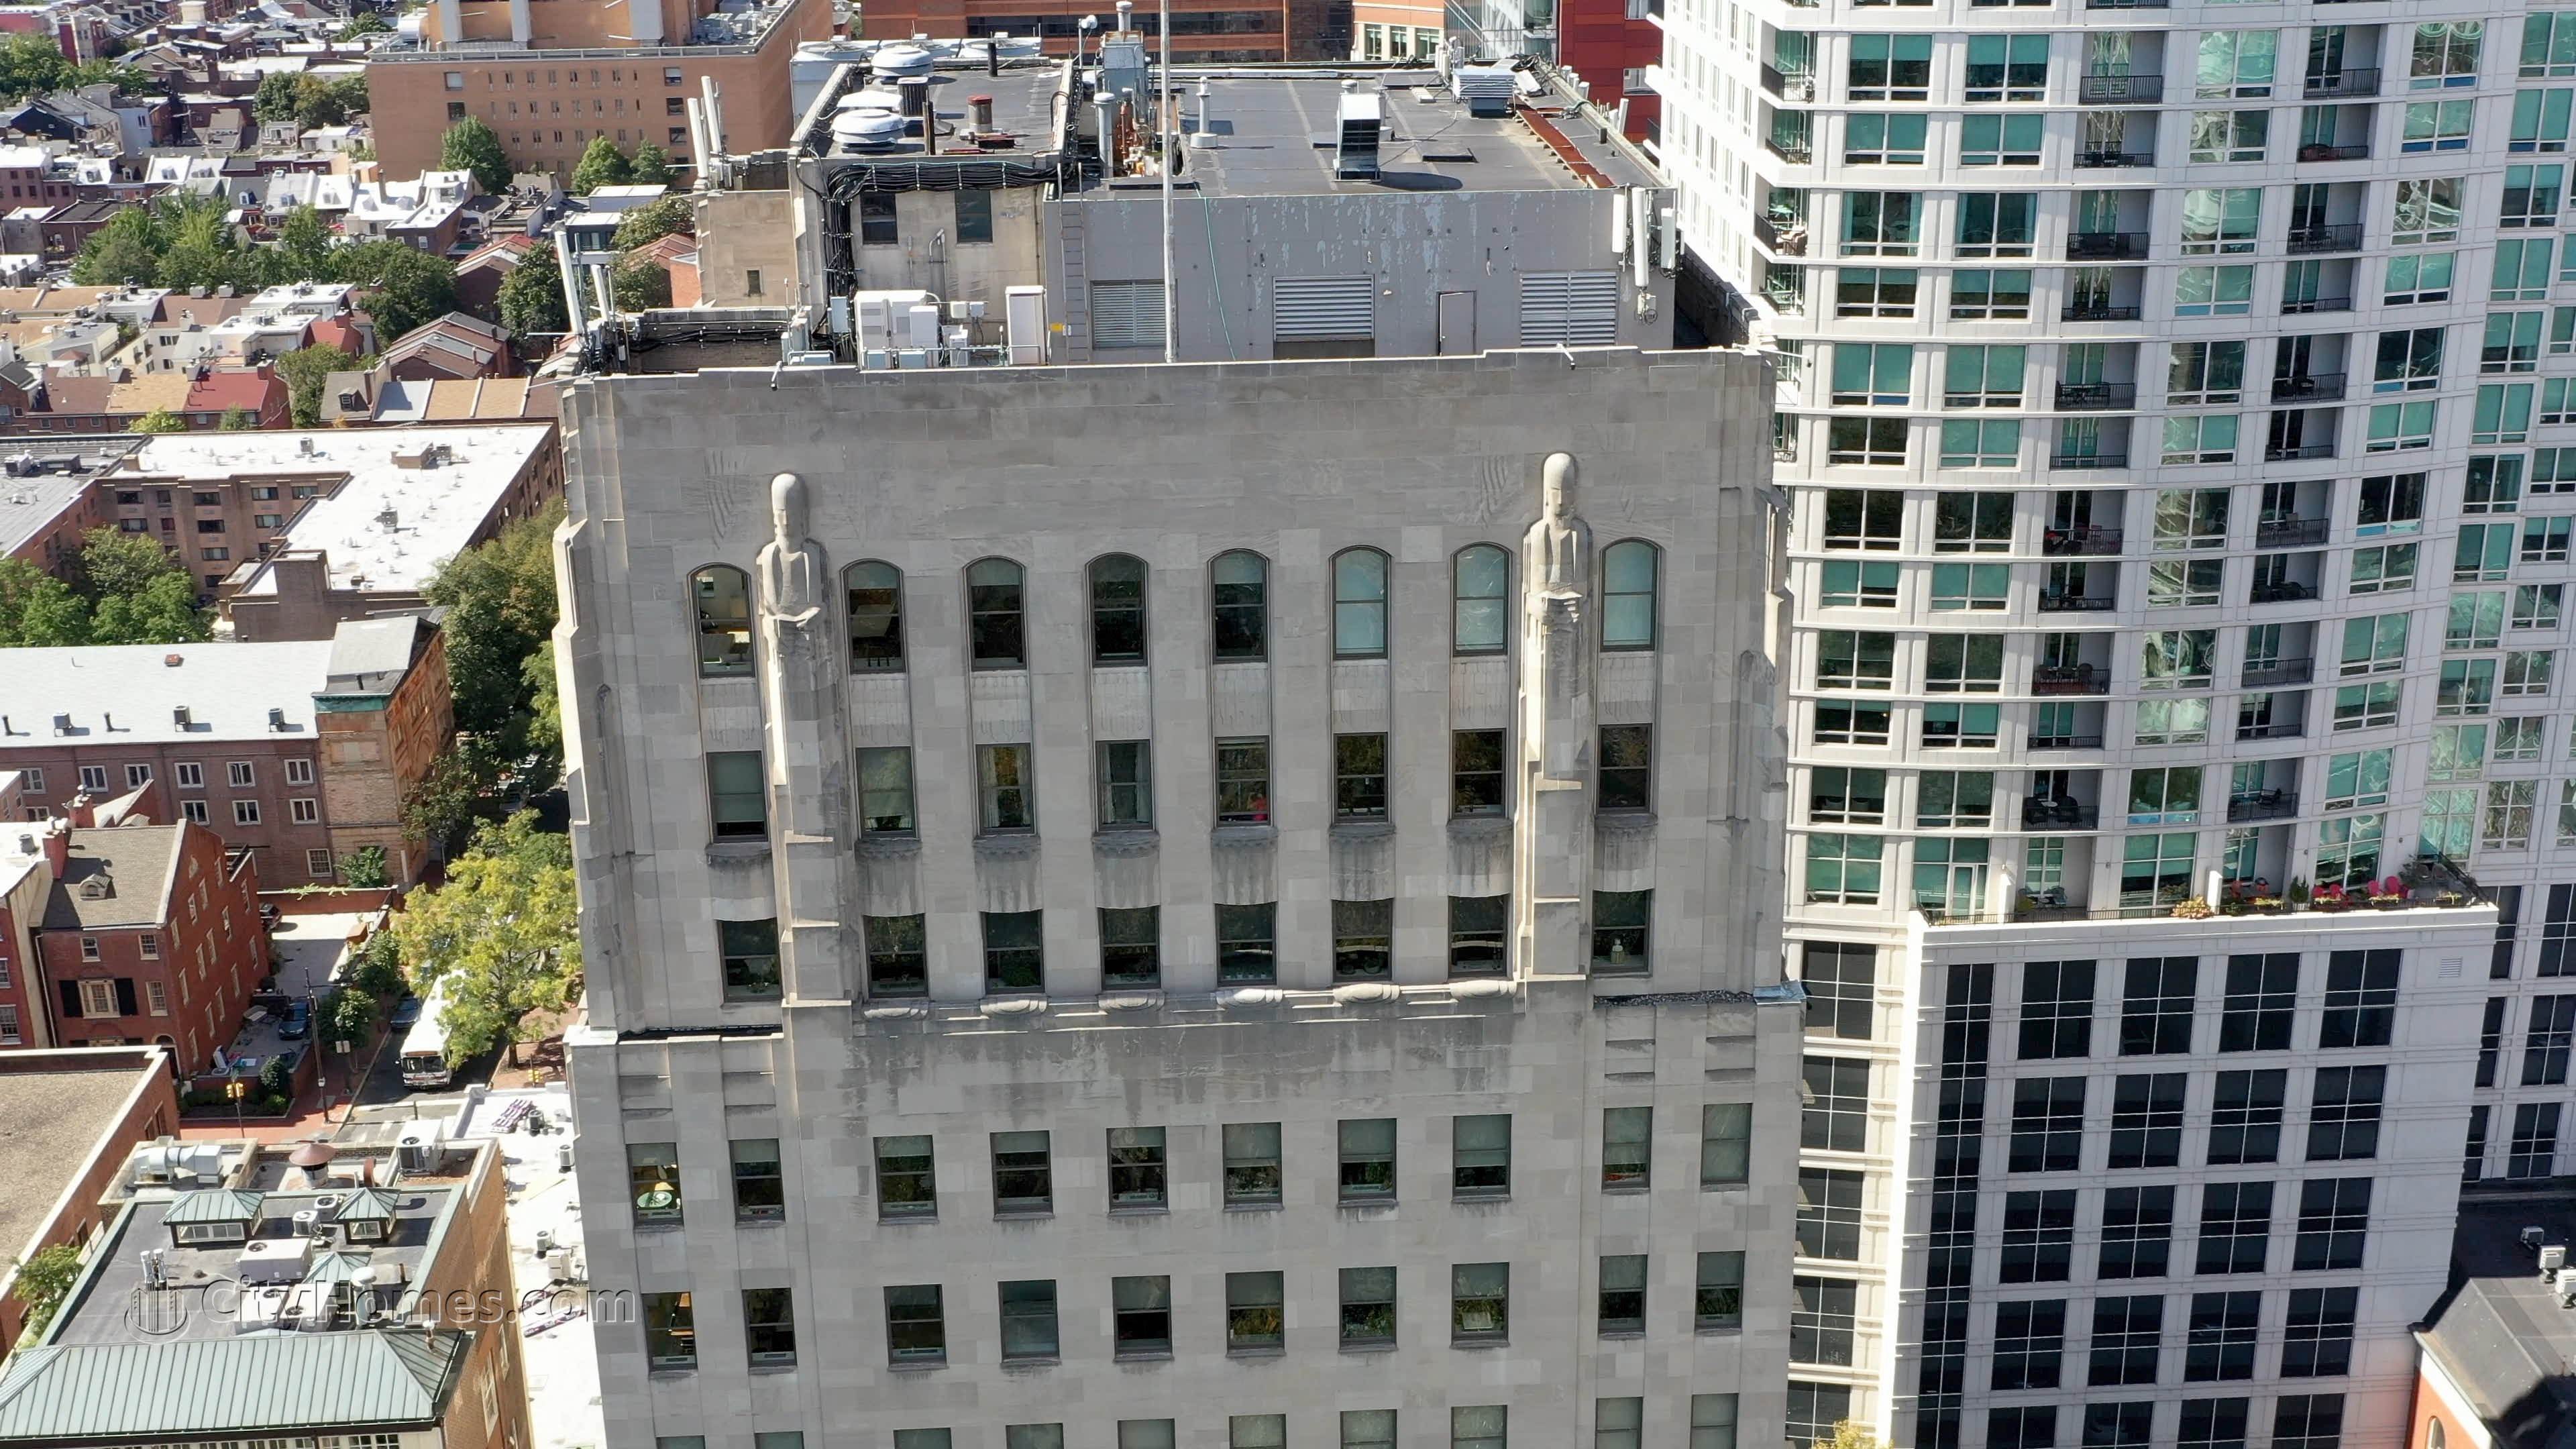 5. The Ayer building at 210 W Washington Sq, Washington Square West, Philadelphia, PA 19107